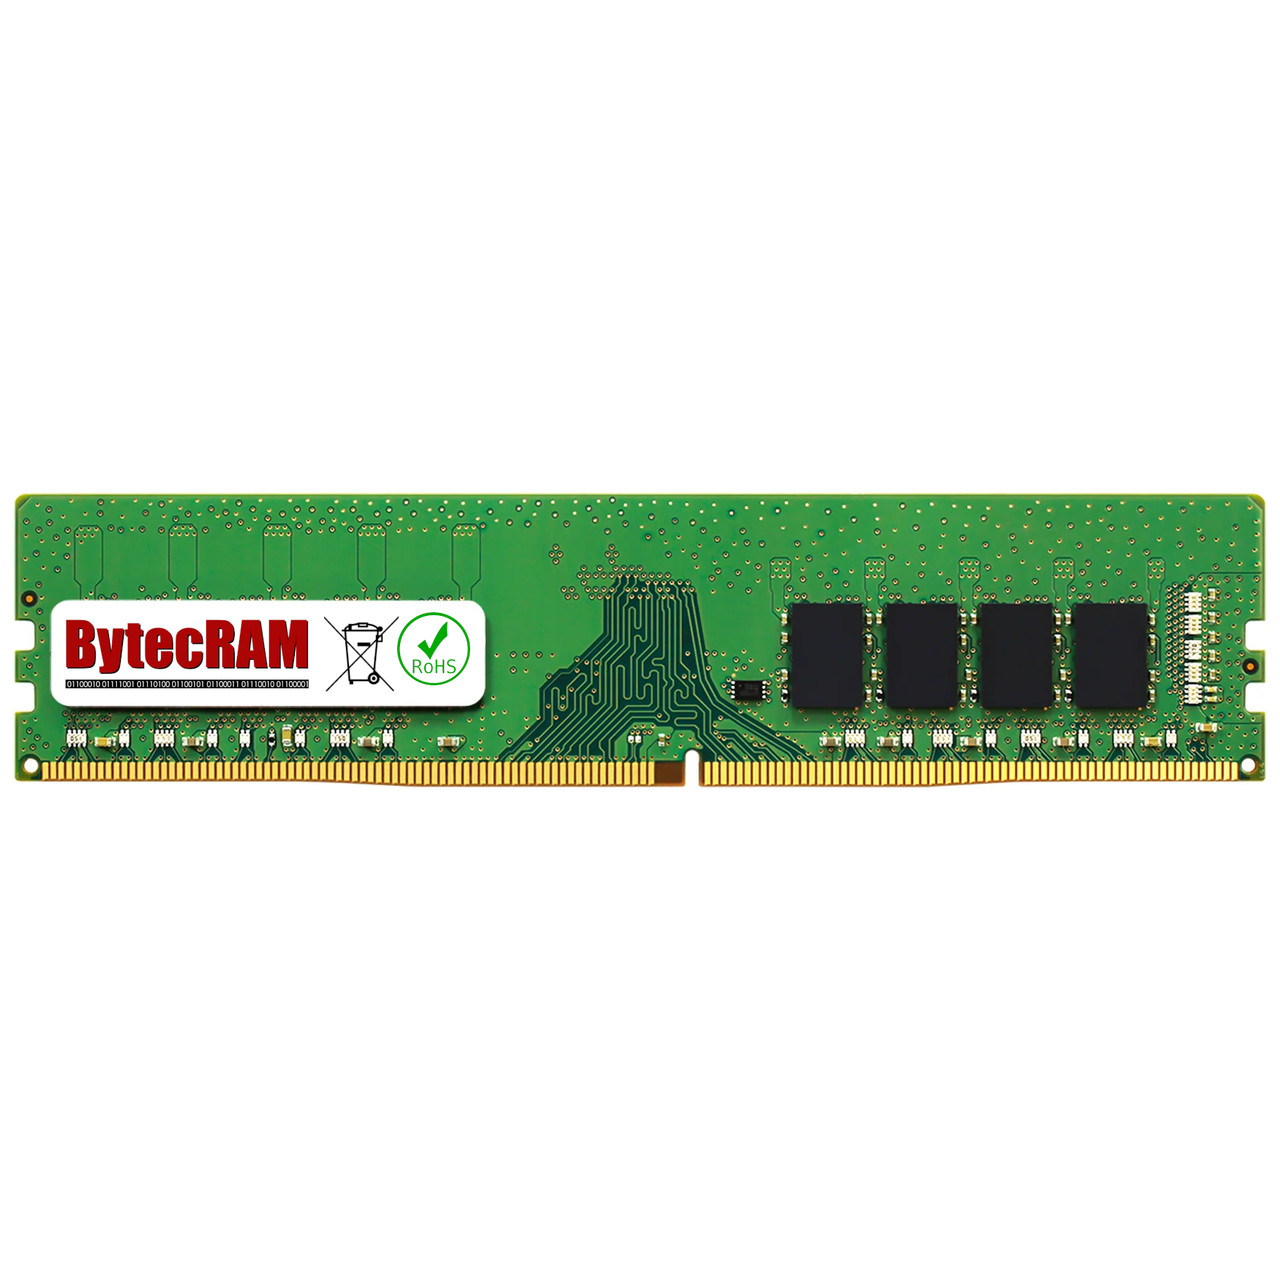 eBay*4GB Dell Vostro 3670 DDR4 2400MHz UDIMM Memory RAM Upgrade